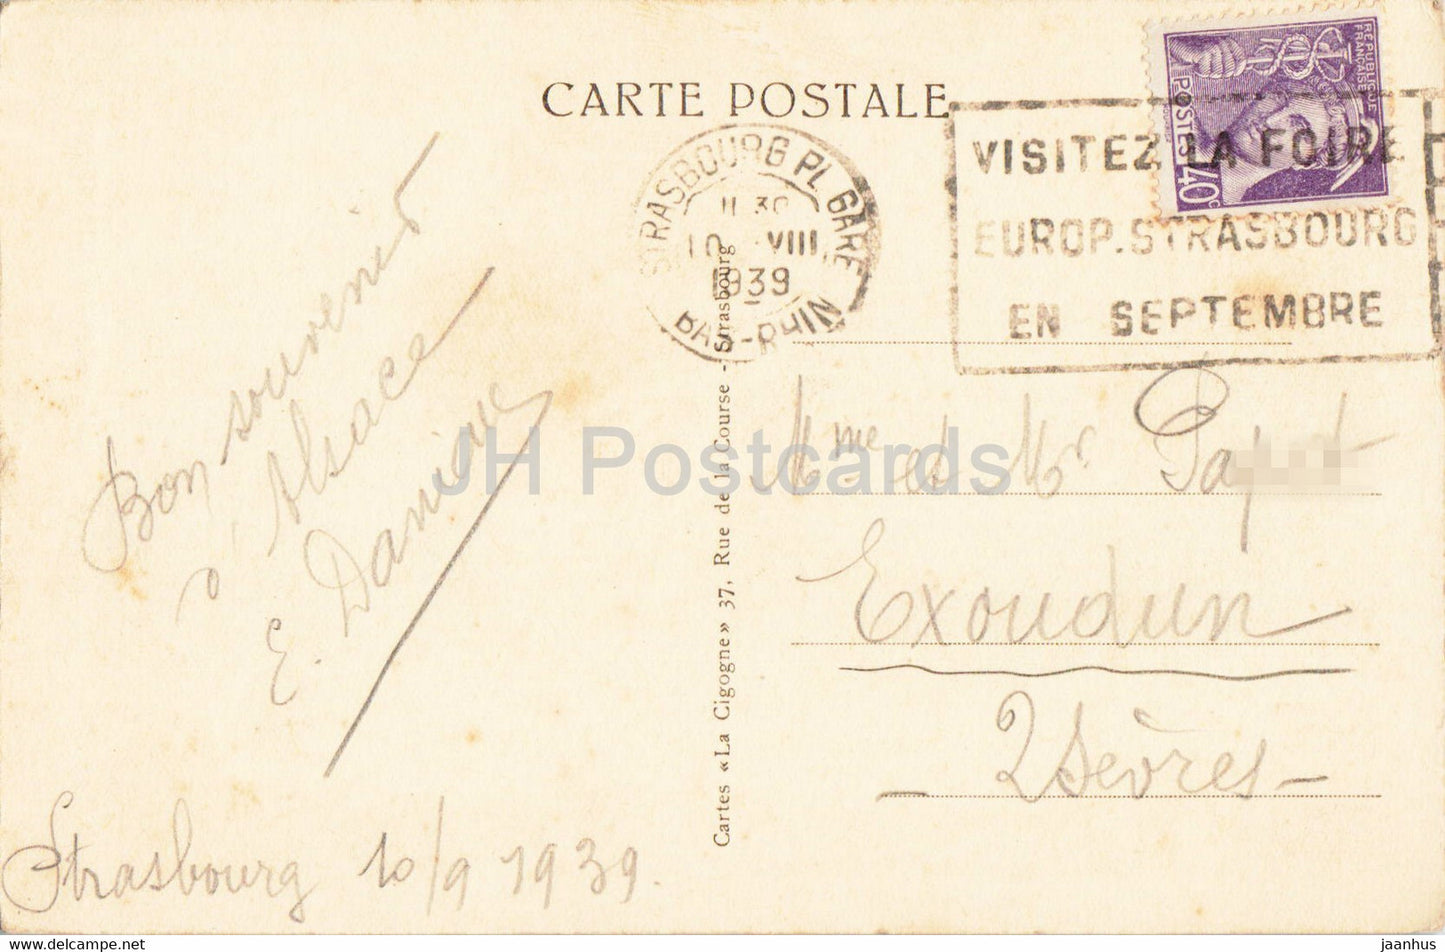 Strasbourg i E - Strasbourg - Cathédrale - L'Horloge Astronomique - cathédrale 479 - carte postale ancienne - 1939 - France - occasion